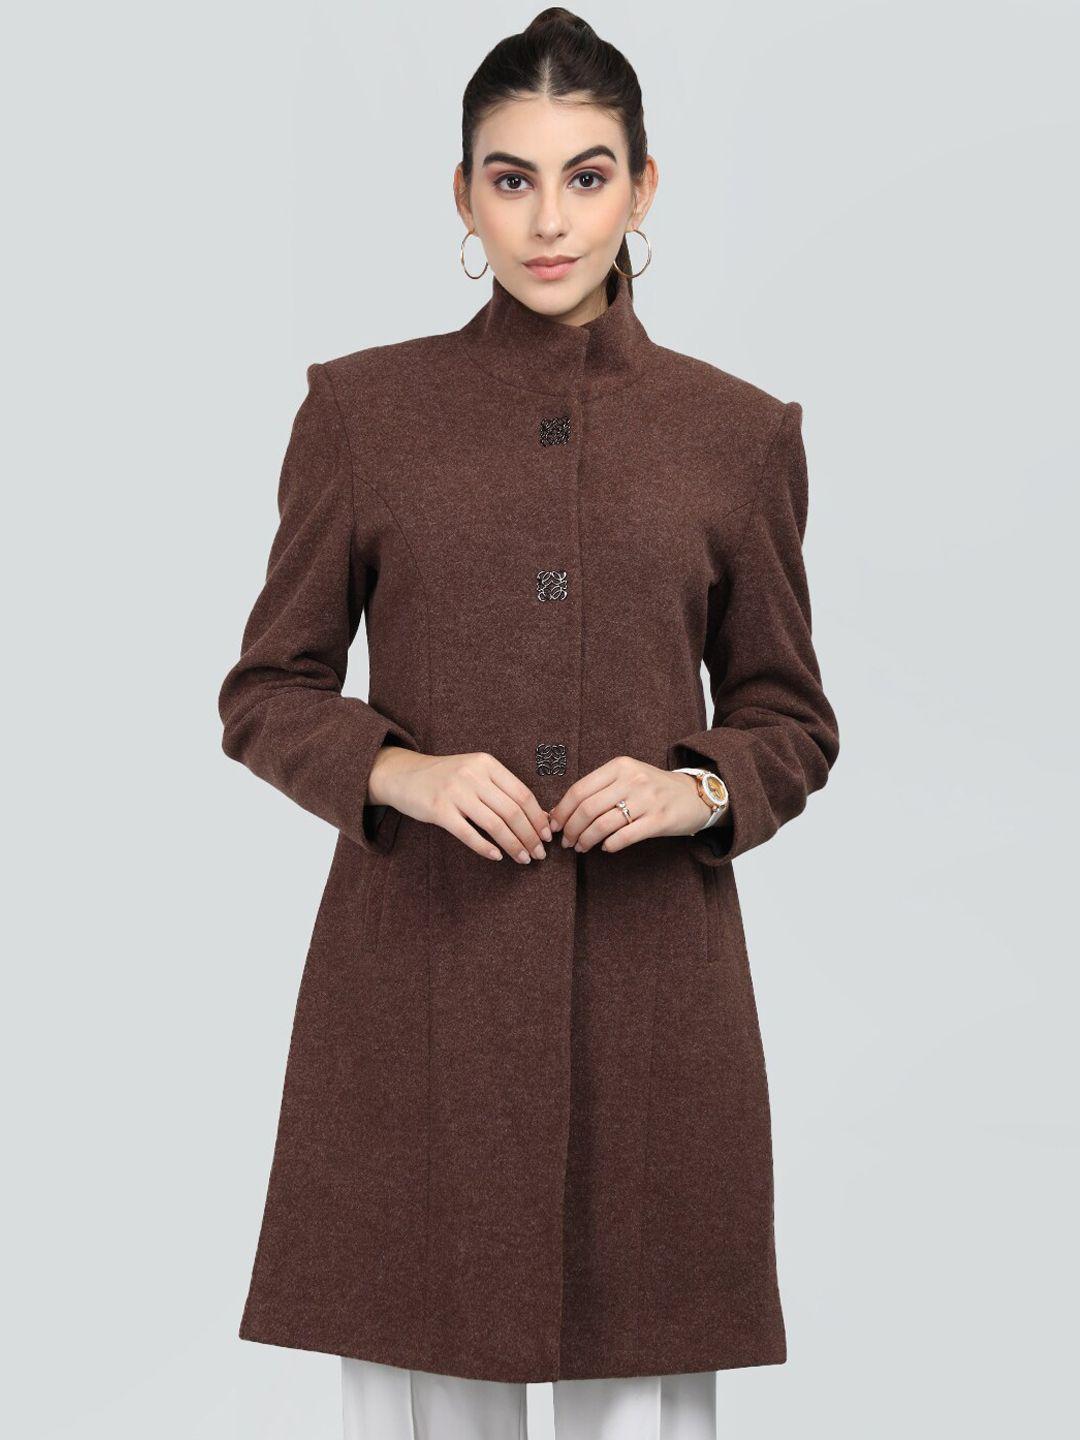 protex mandarin collar longline woolen pea coat